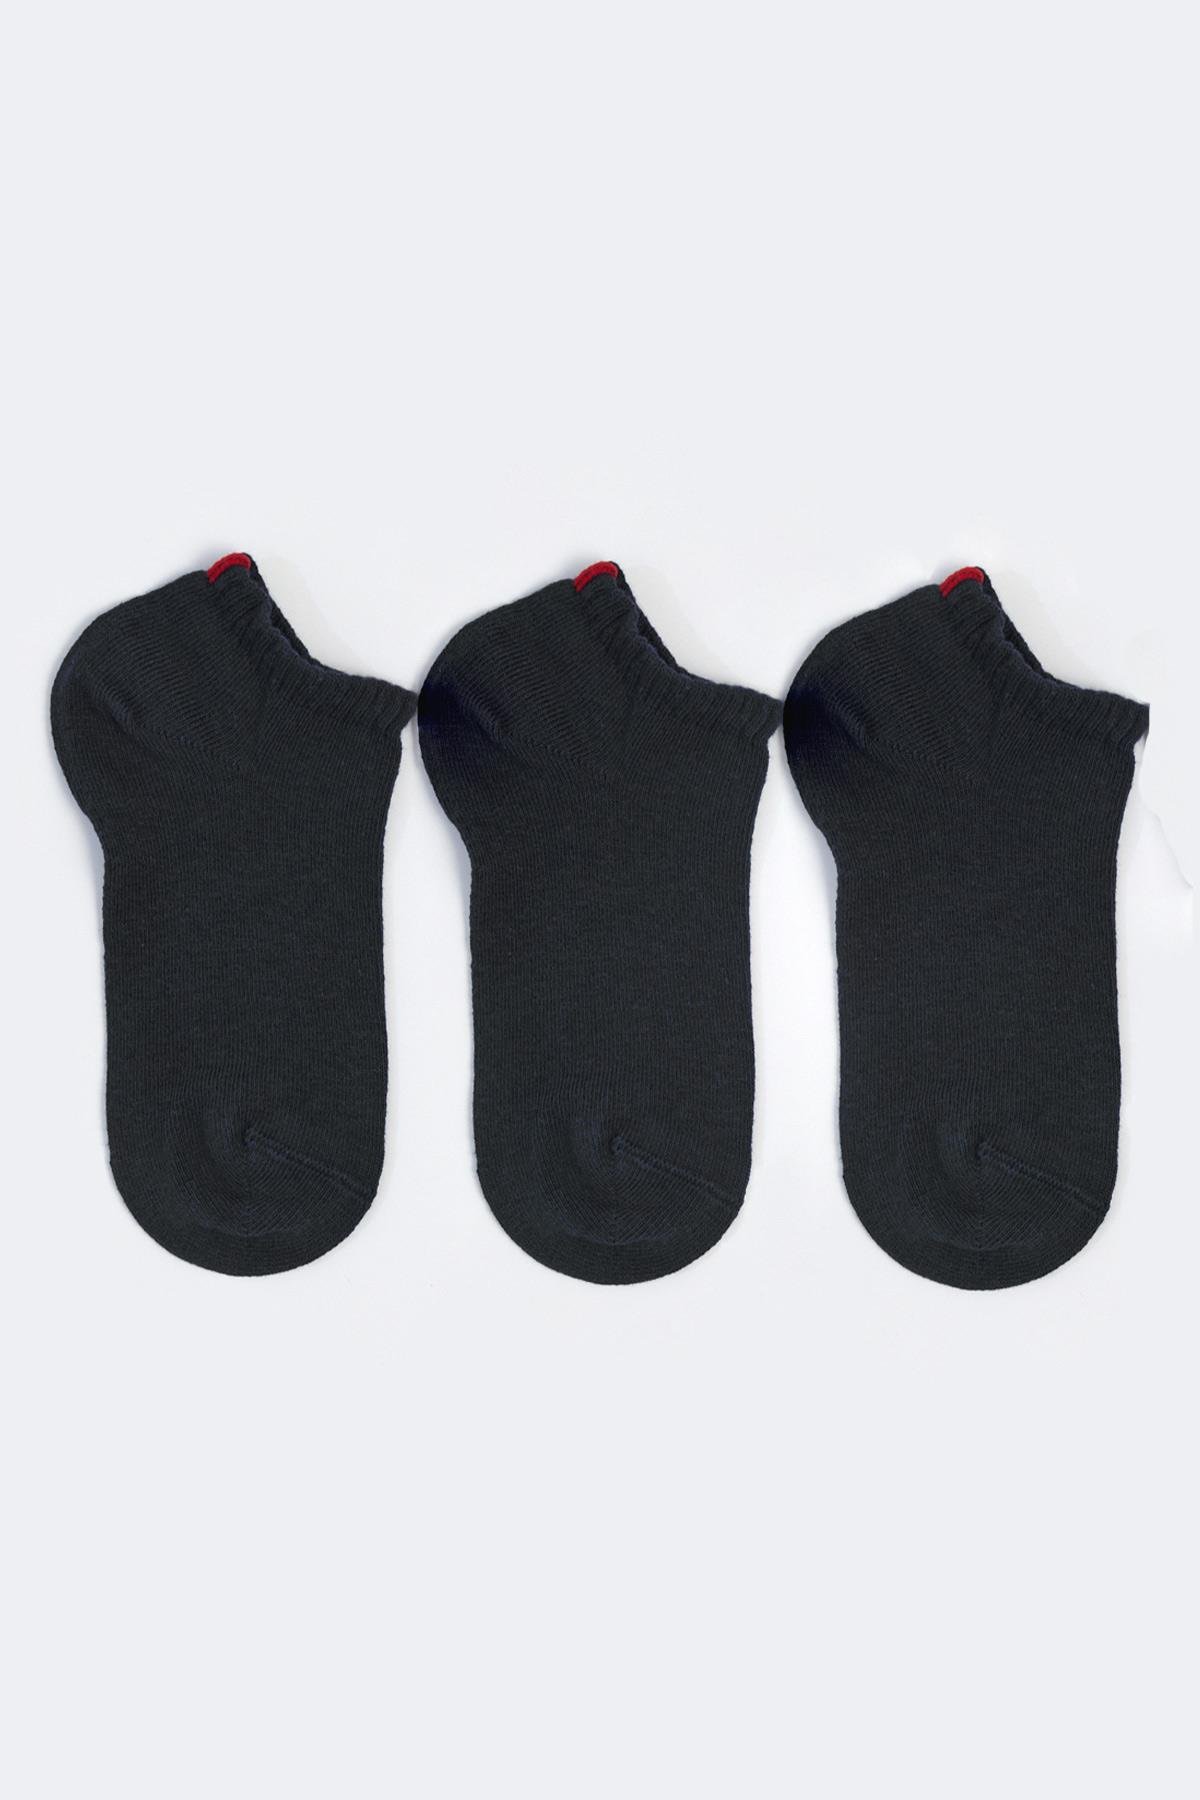 Run 3 lü Kadın Basic Patik Çorap Siyah/Siyah/Siyah